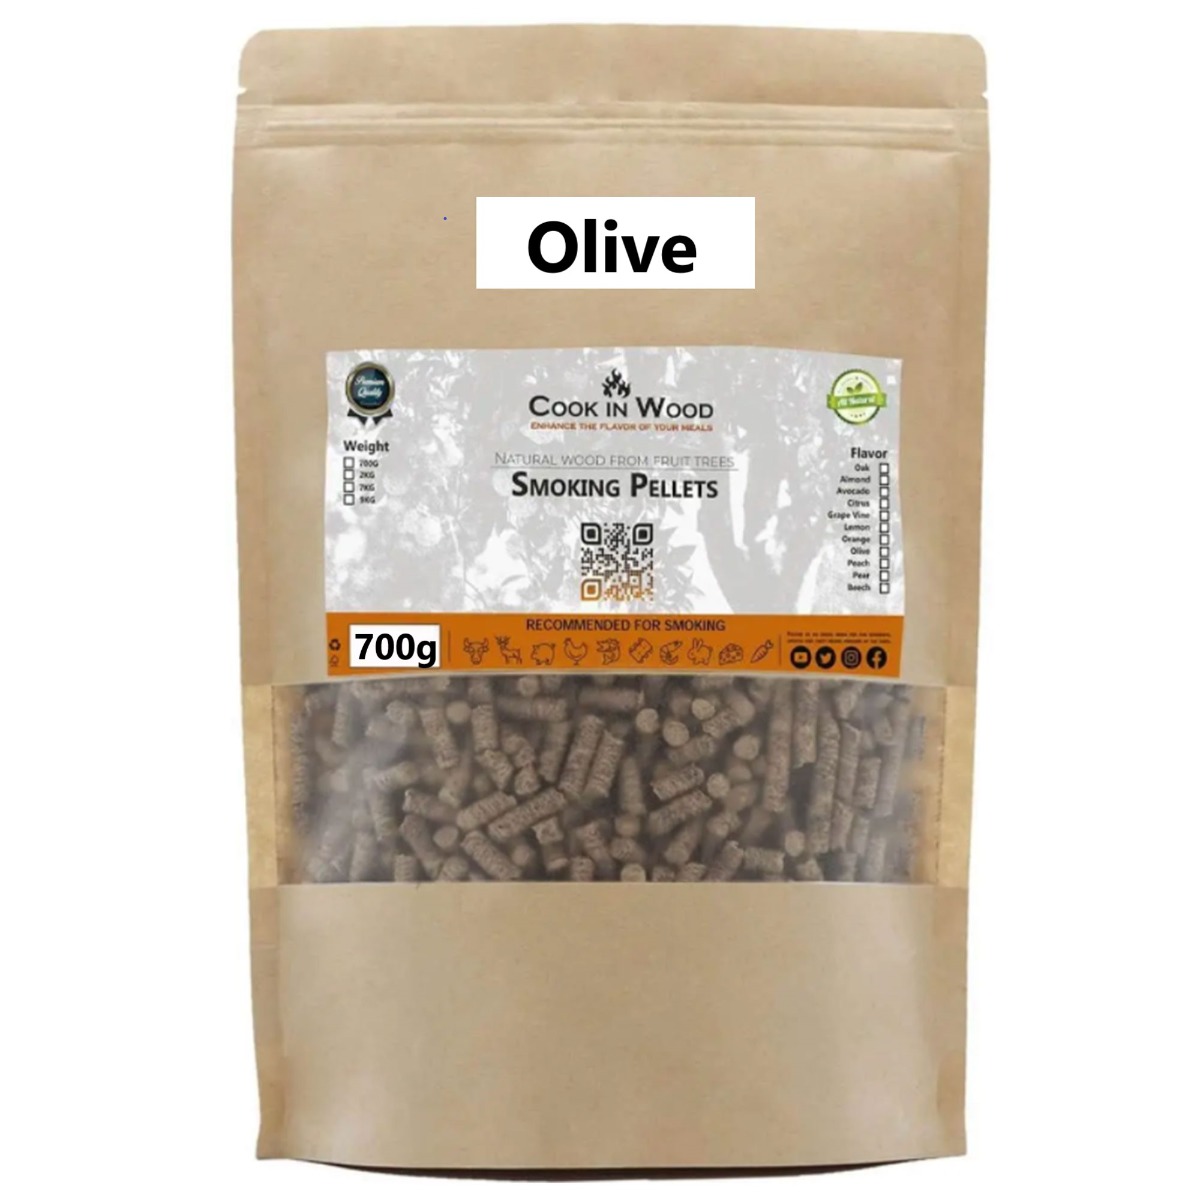 Olive Smoking Pellets, 700g - Cook In Wood®